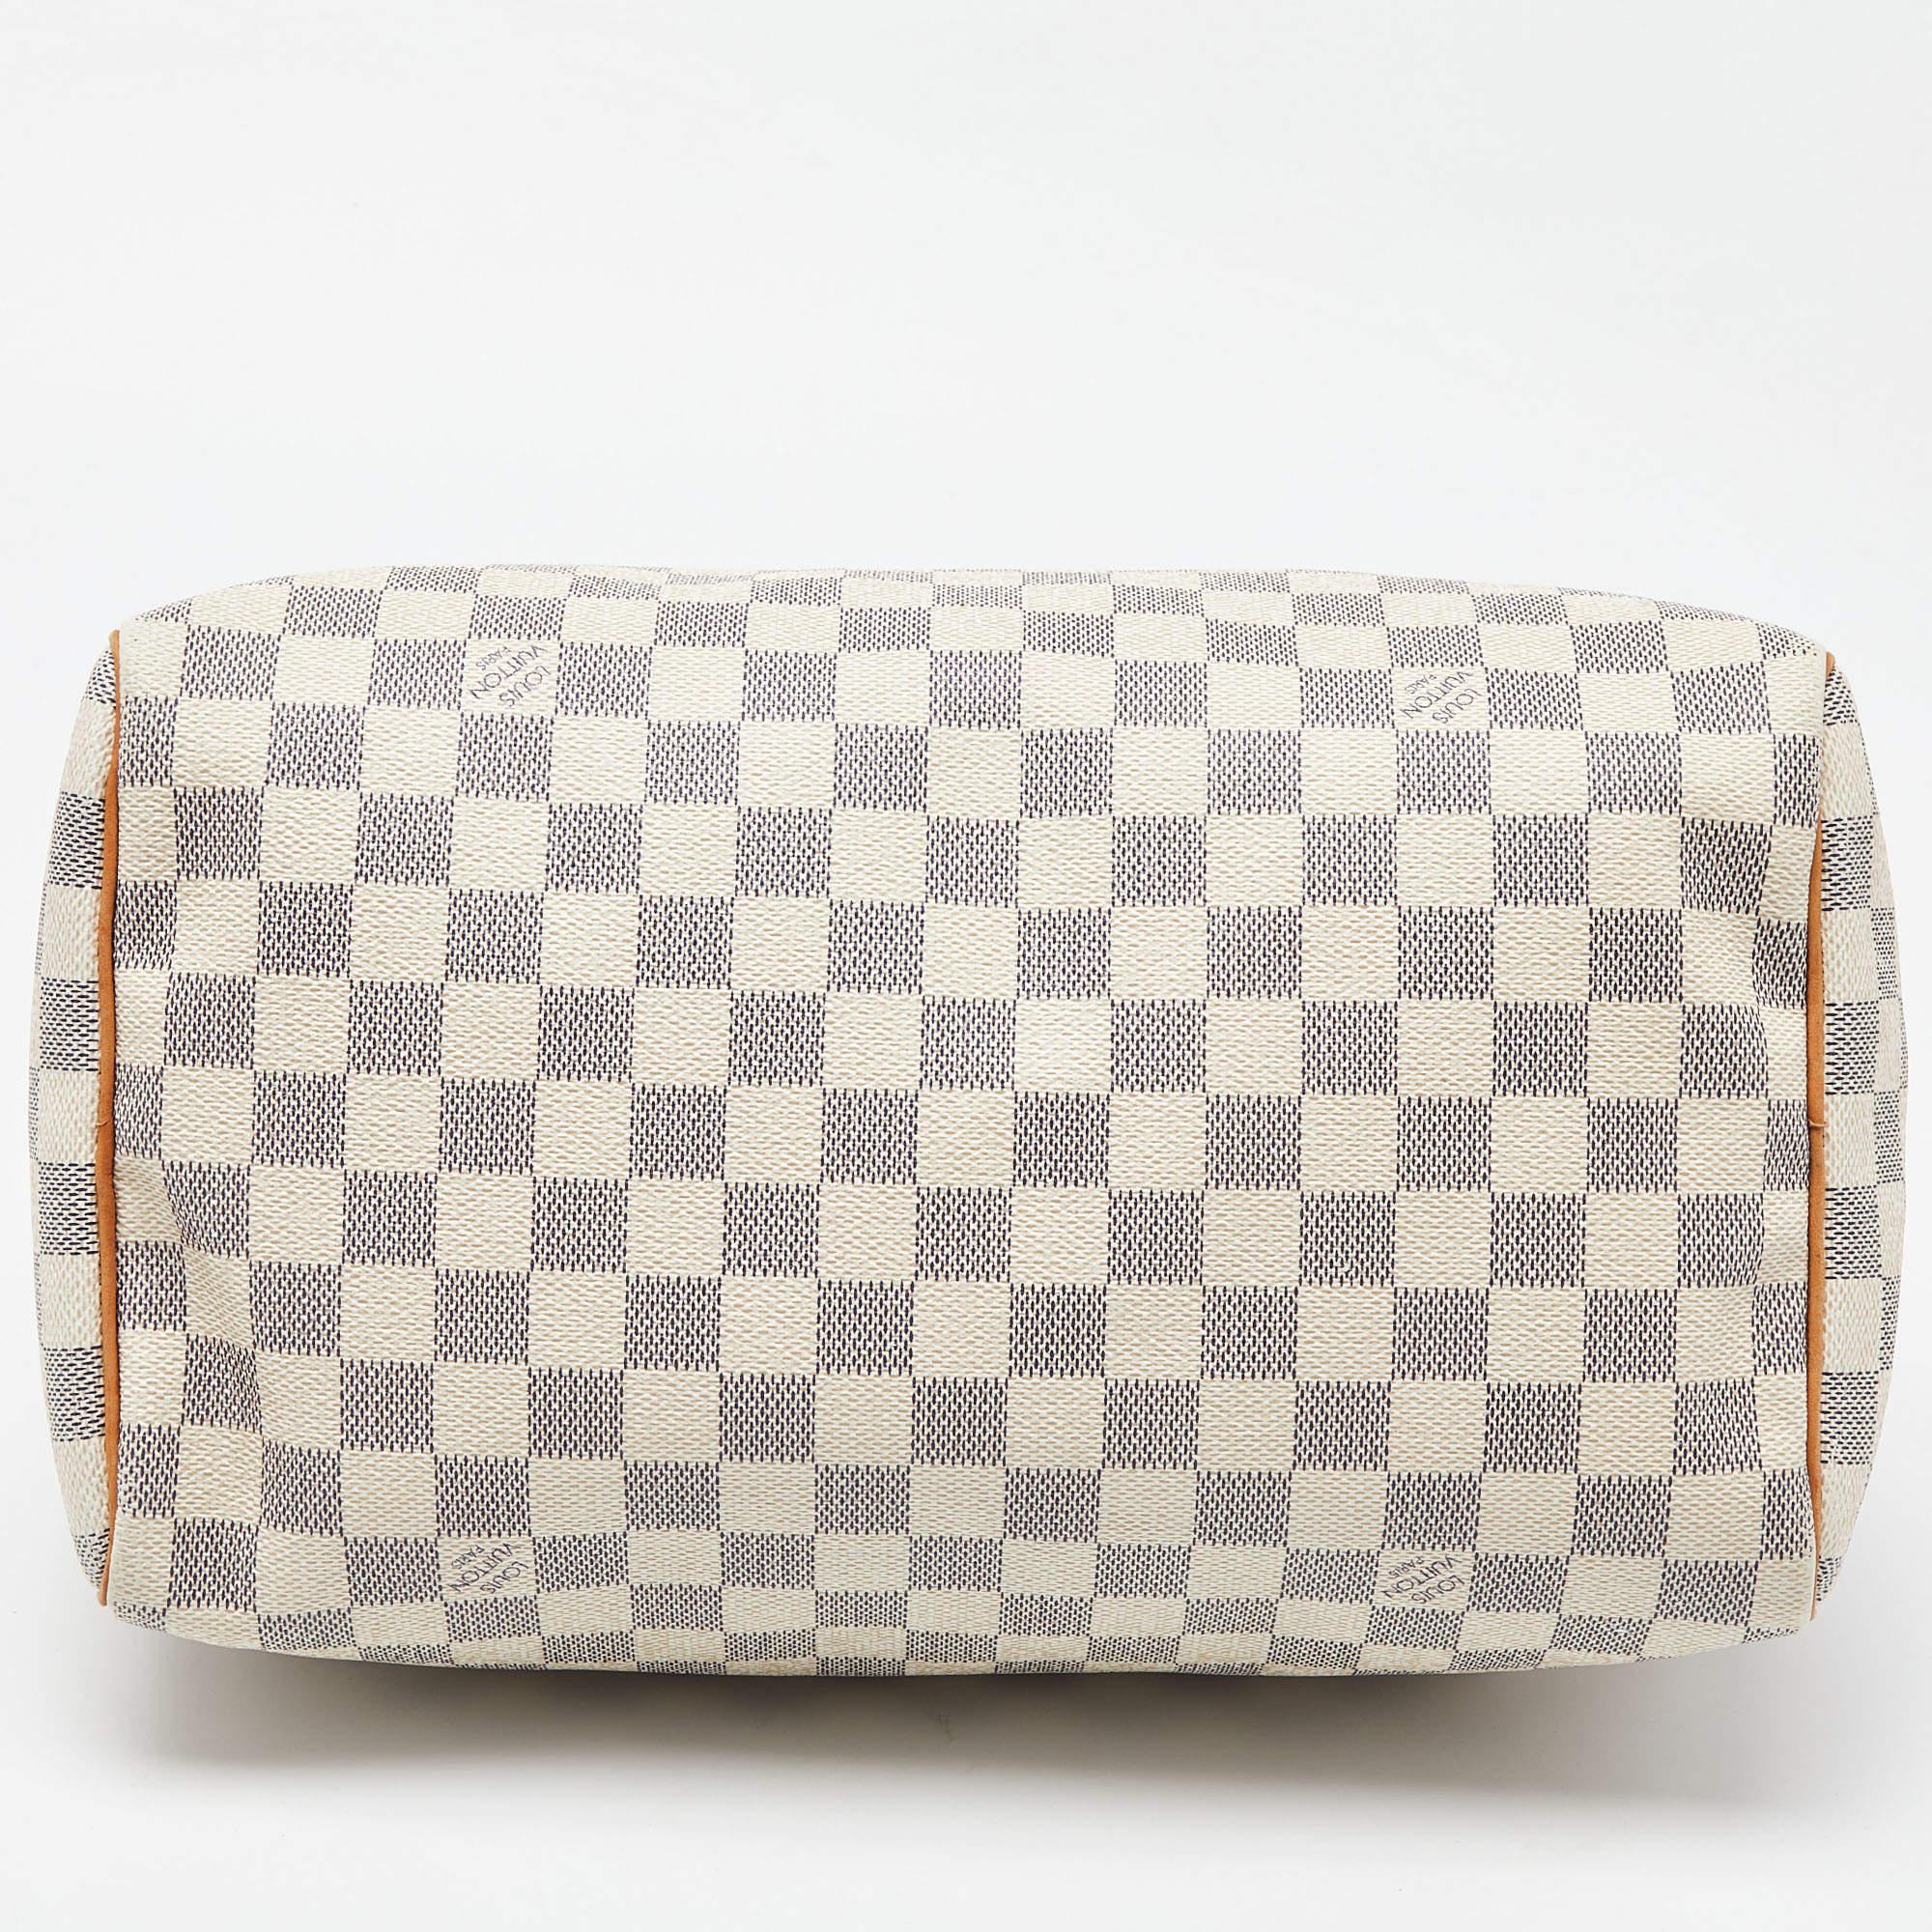 Louis Vuitton Damier Azur Canvas Speedy 30 Bag 7